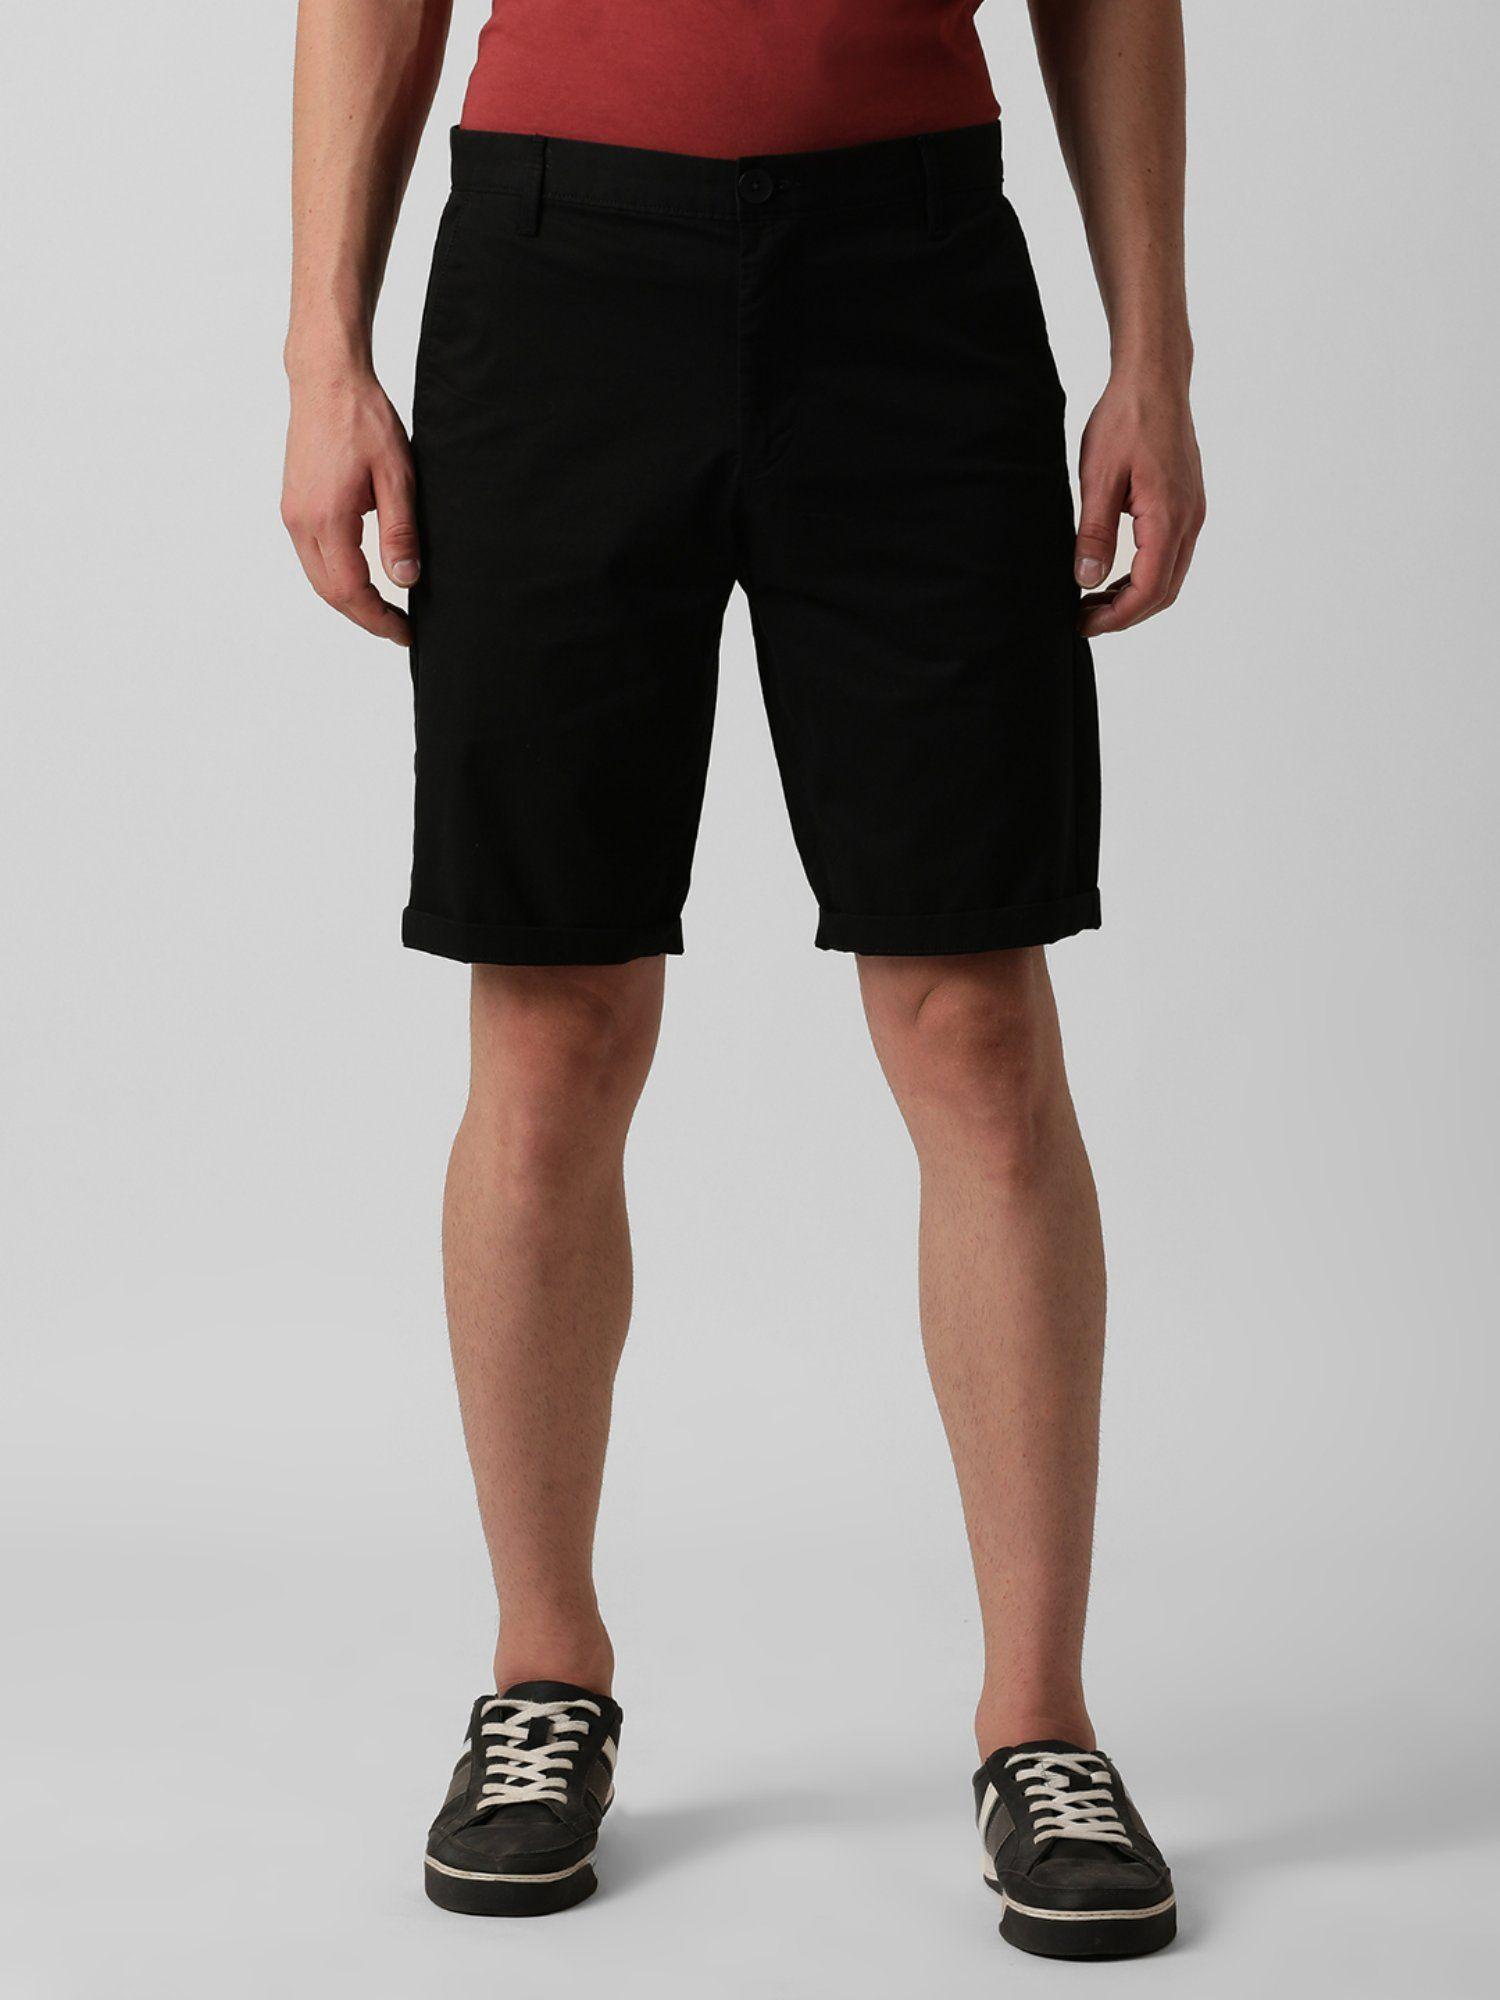 men justin black shorts slim